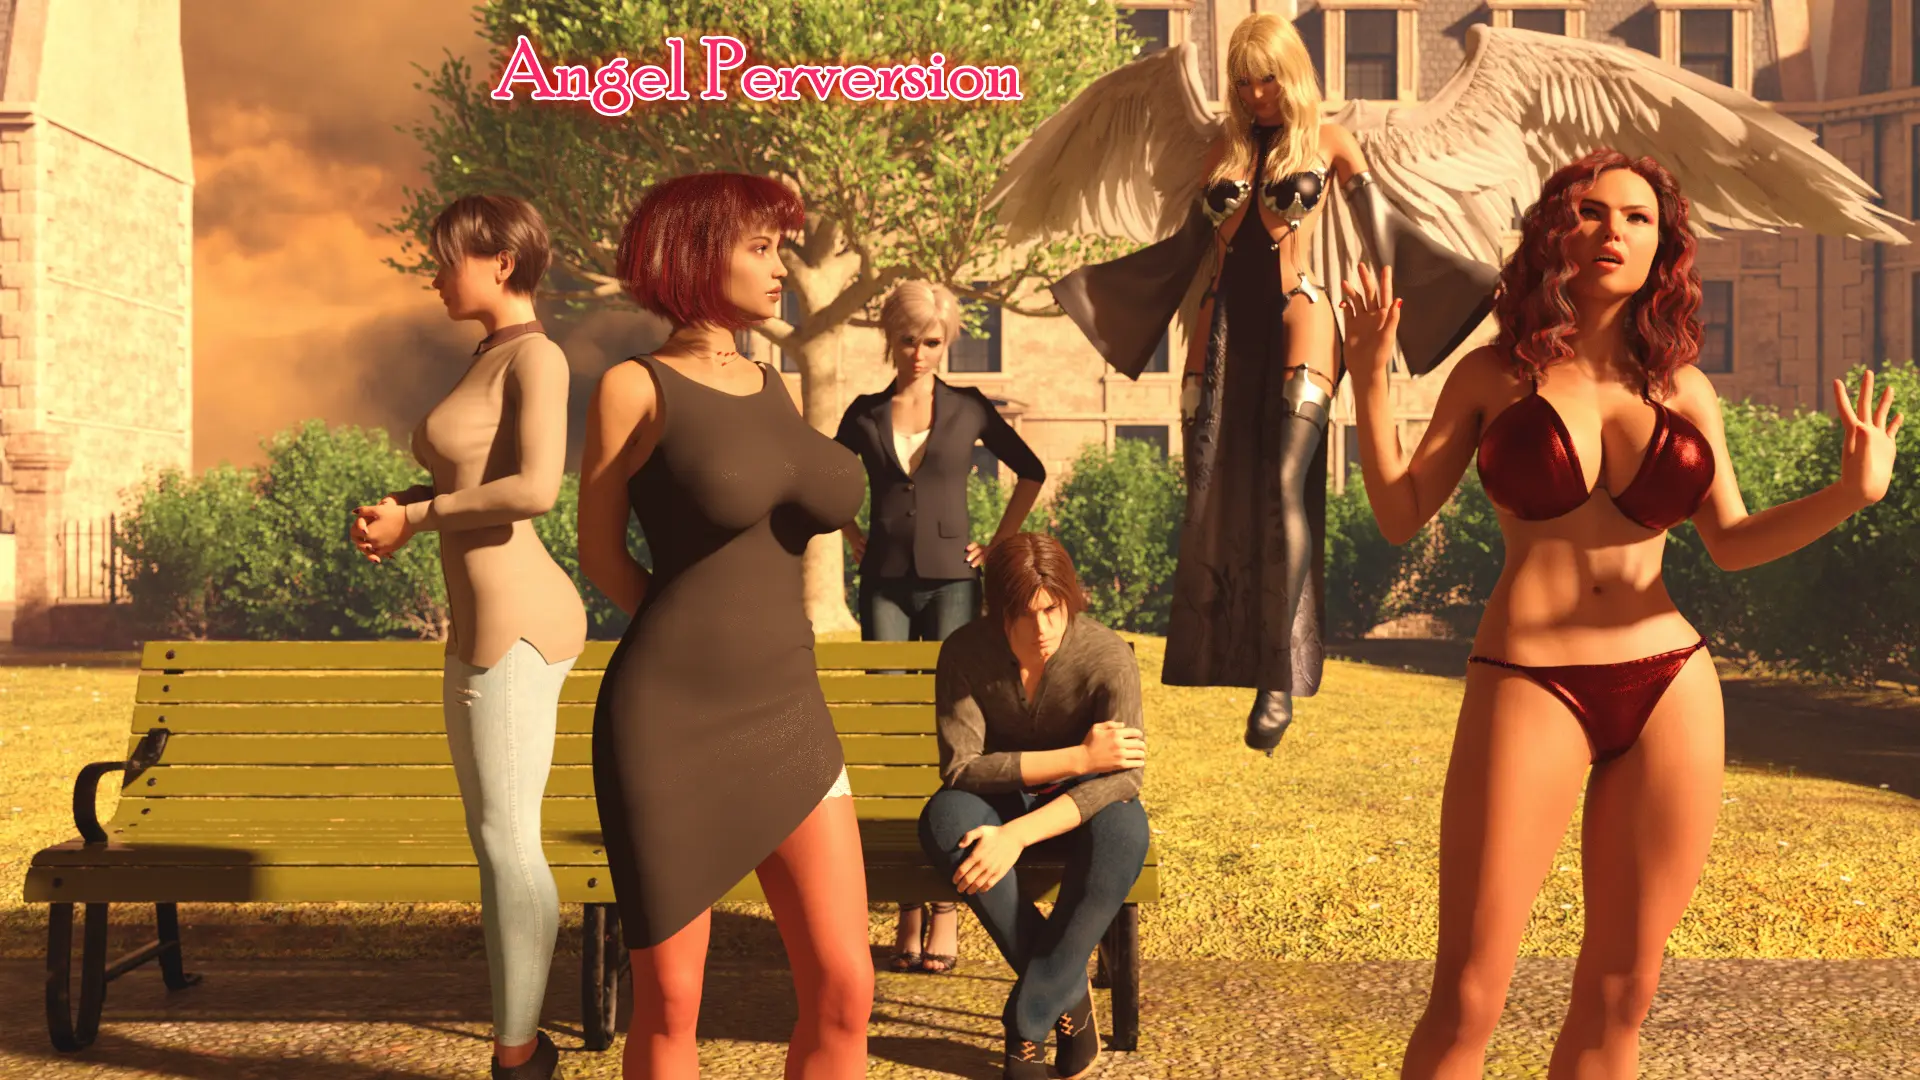 Angel Perversion main image